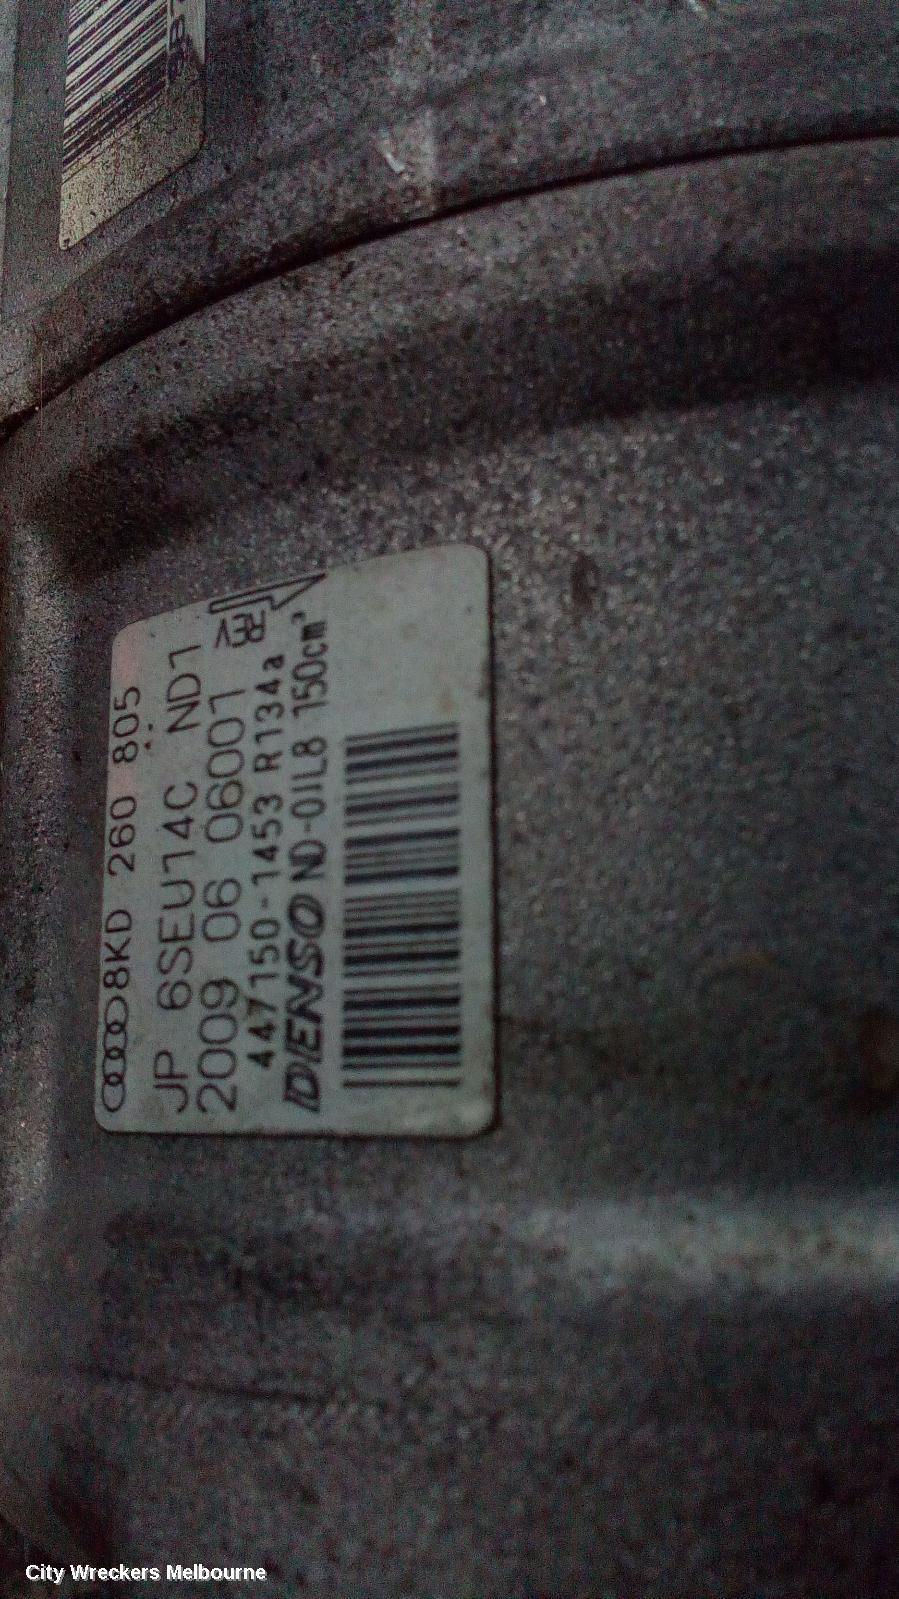 AUDI A4 2010 A/C Compressor